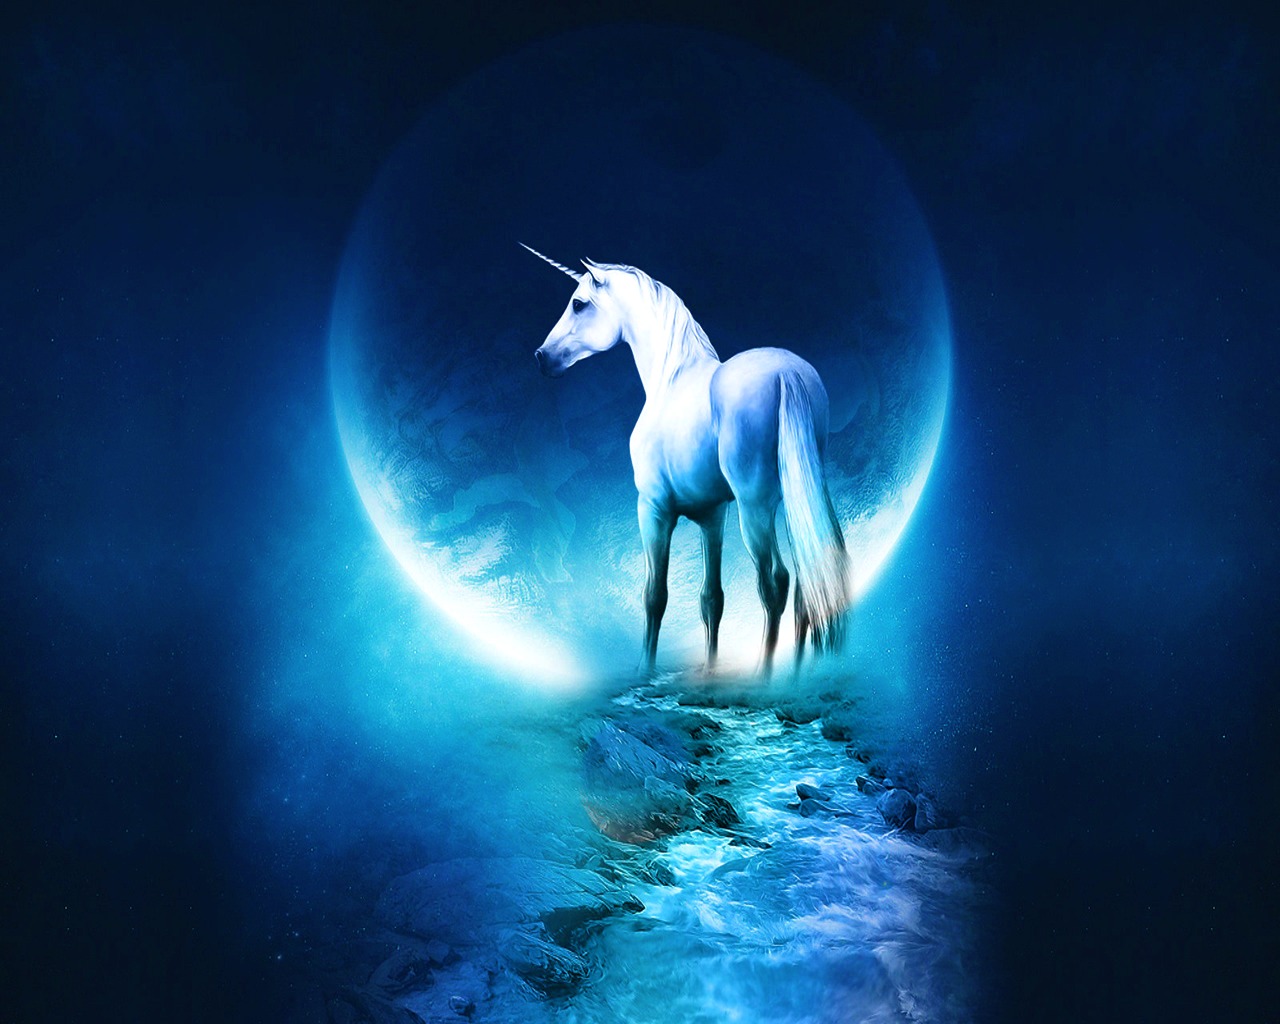 Fantasy images Unicorn wallpaper photos 31301602 1280x1024